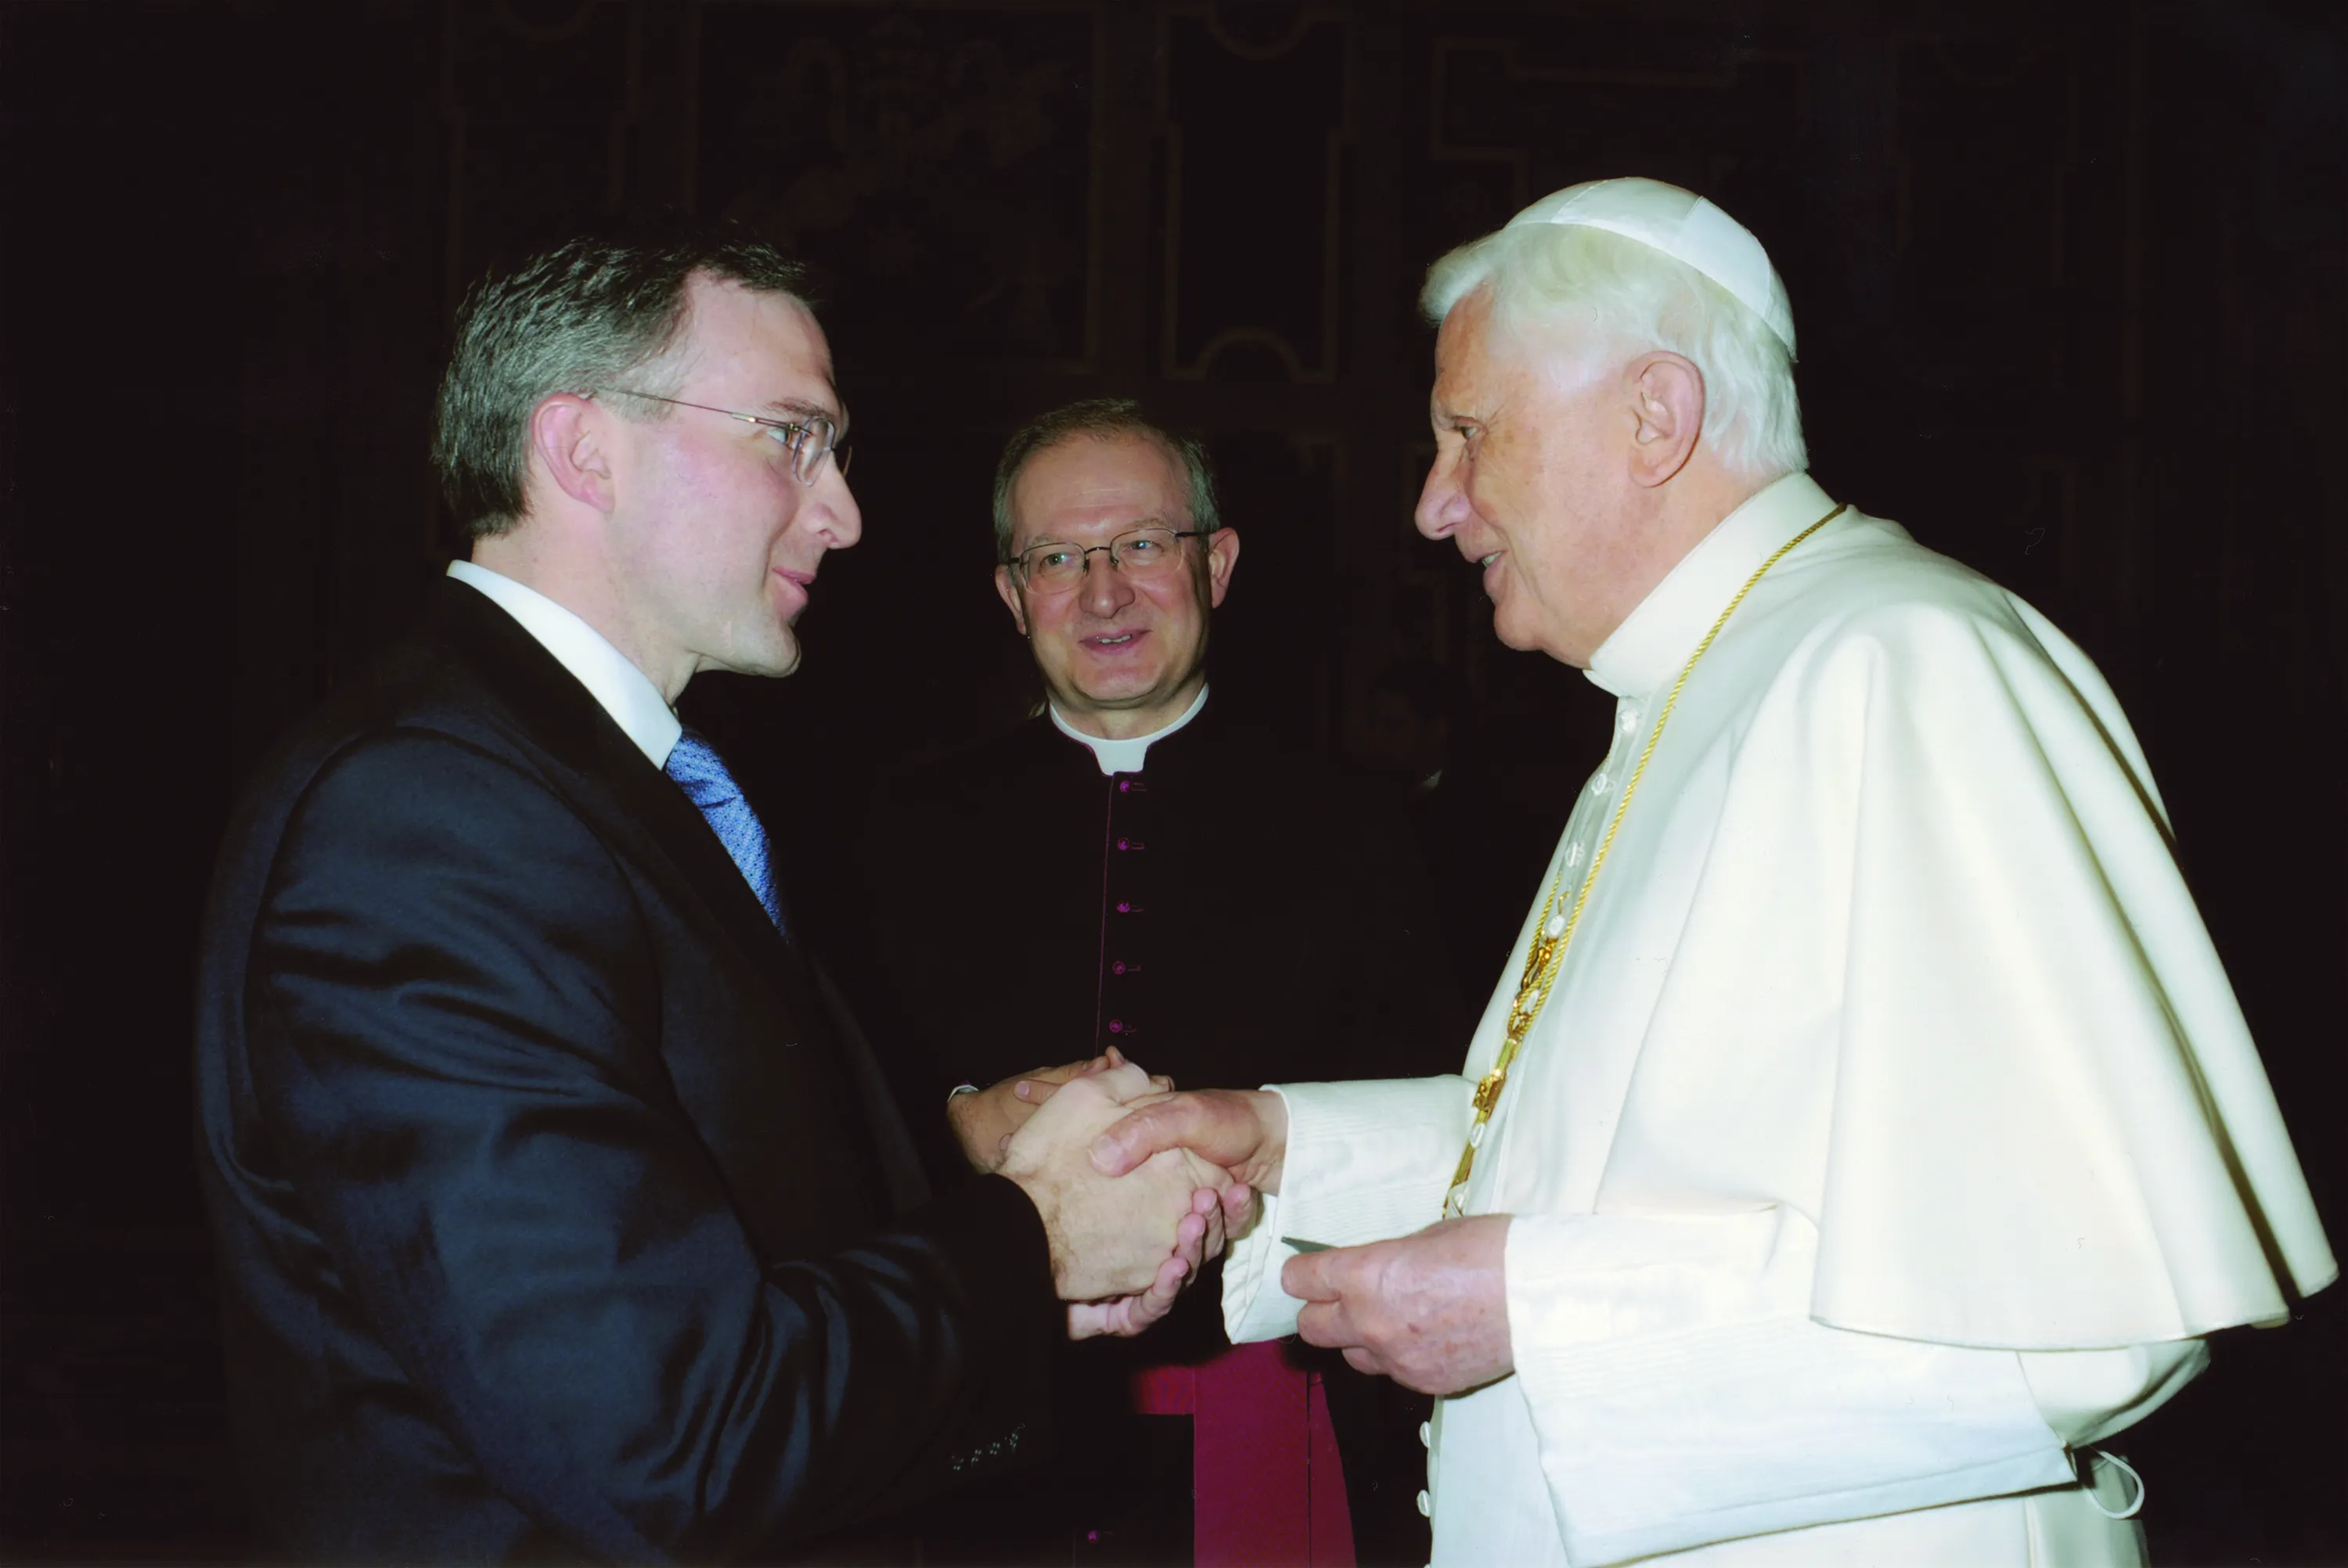 The future Supreme Knight Patrick E. Kelly greeting Pope Benedict XVI, April 5, 2008.?w=200&h=150